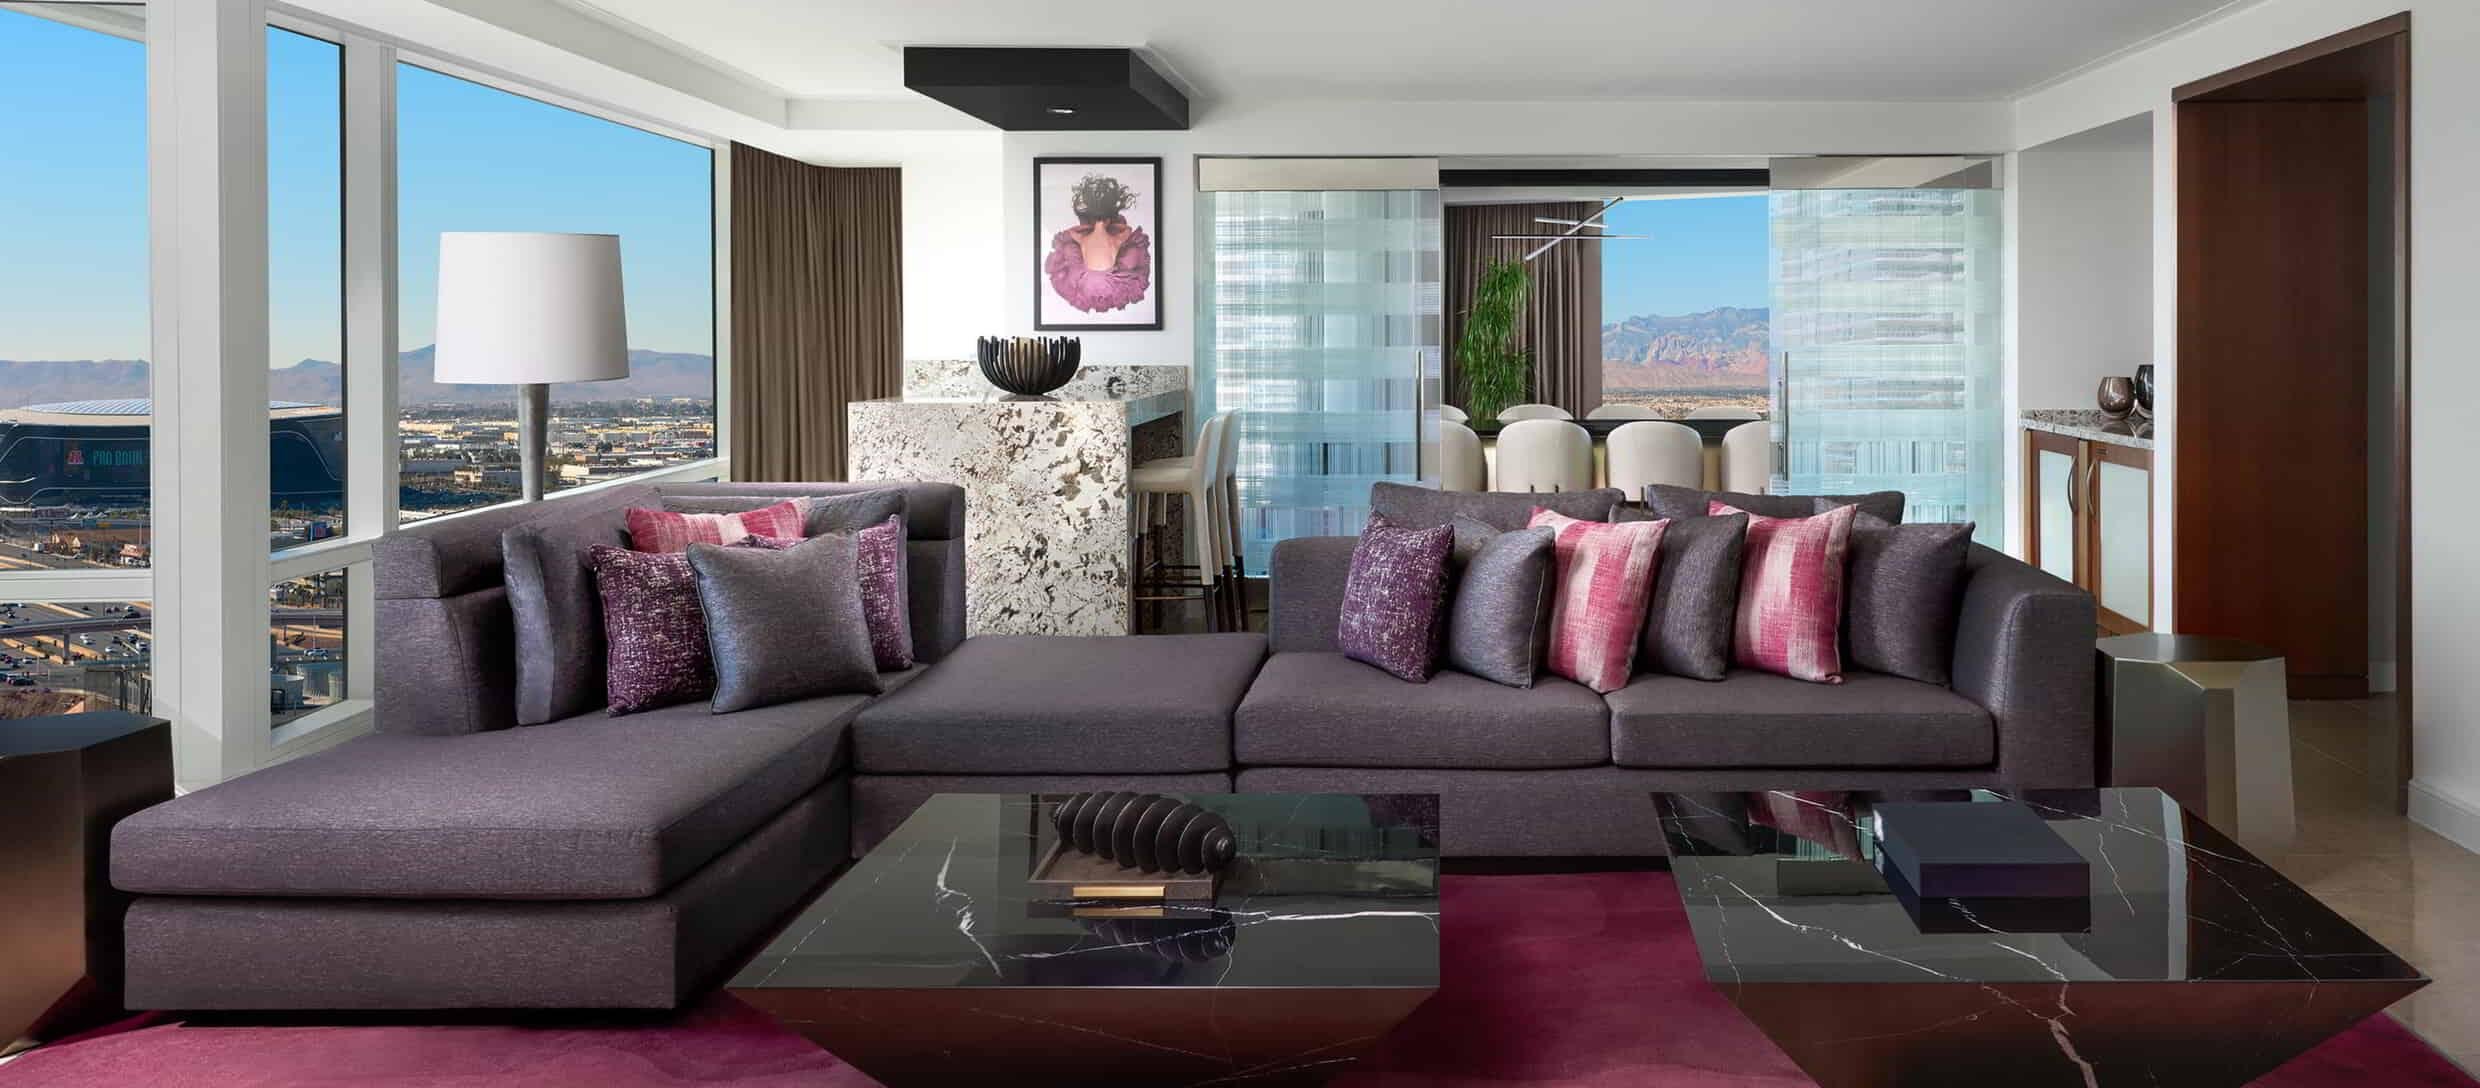 aria-hotel-executive-hospitality-suite-living-room.jpg.image.2480.1088.high.jpg